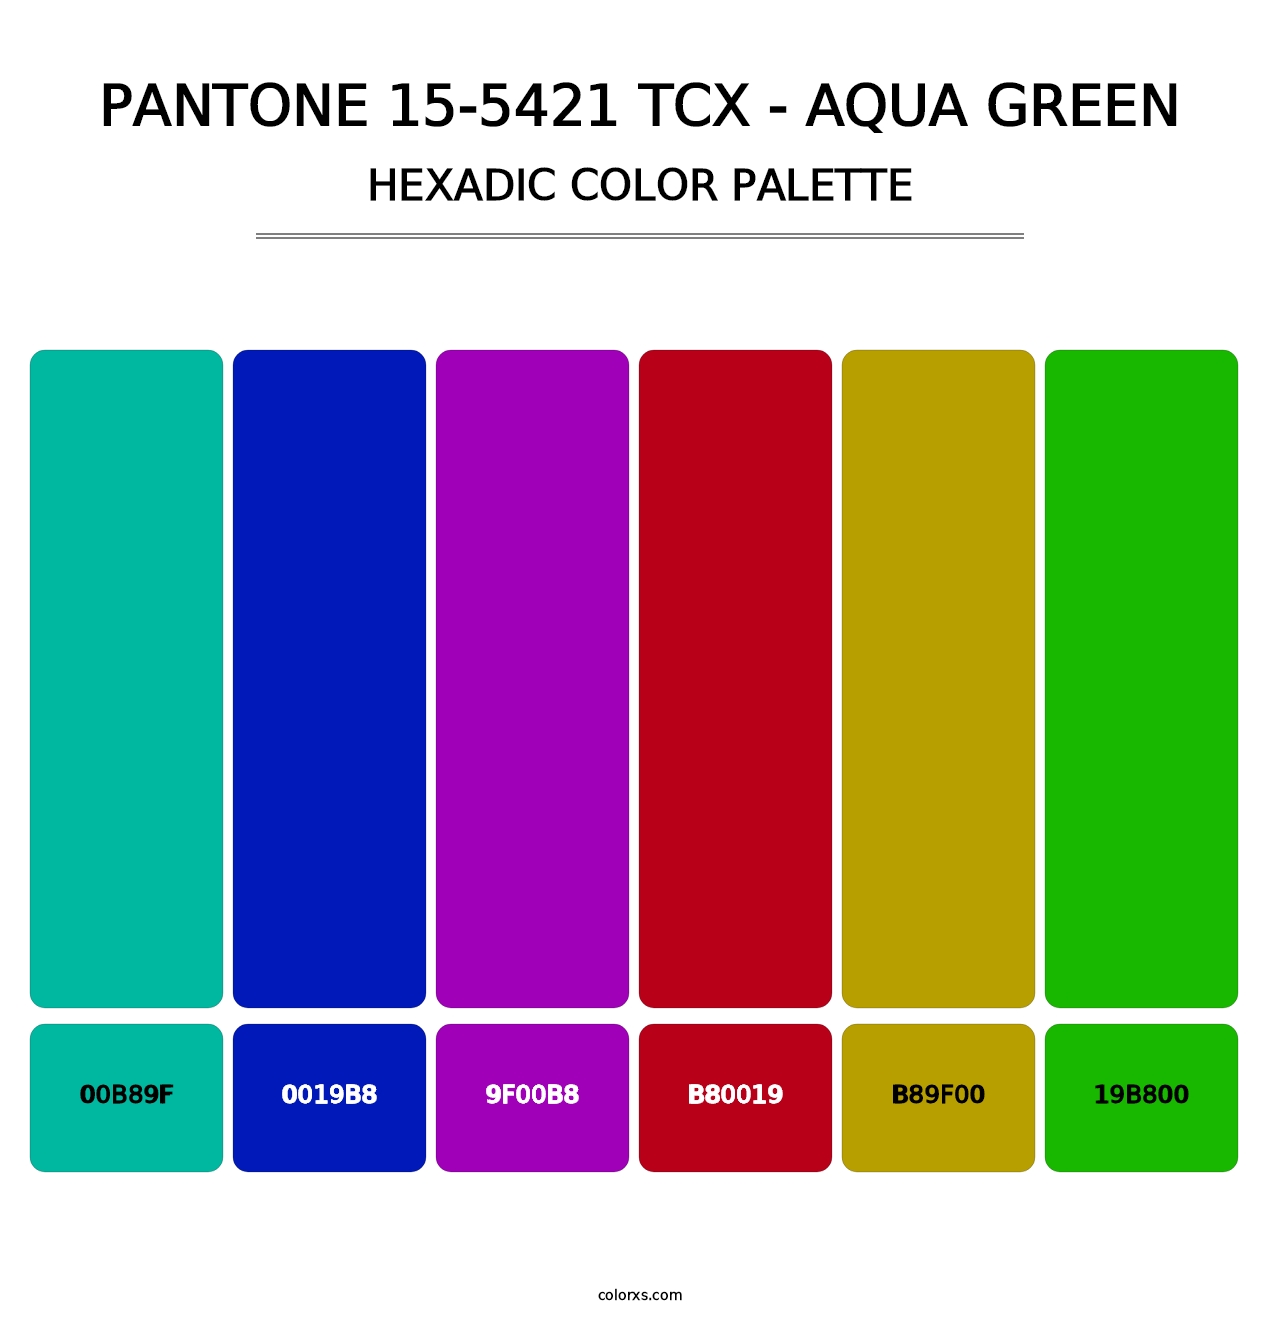 PANTONE 15-5421 TCX - Aqua Green - Hexadic Color Palette